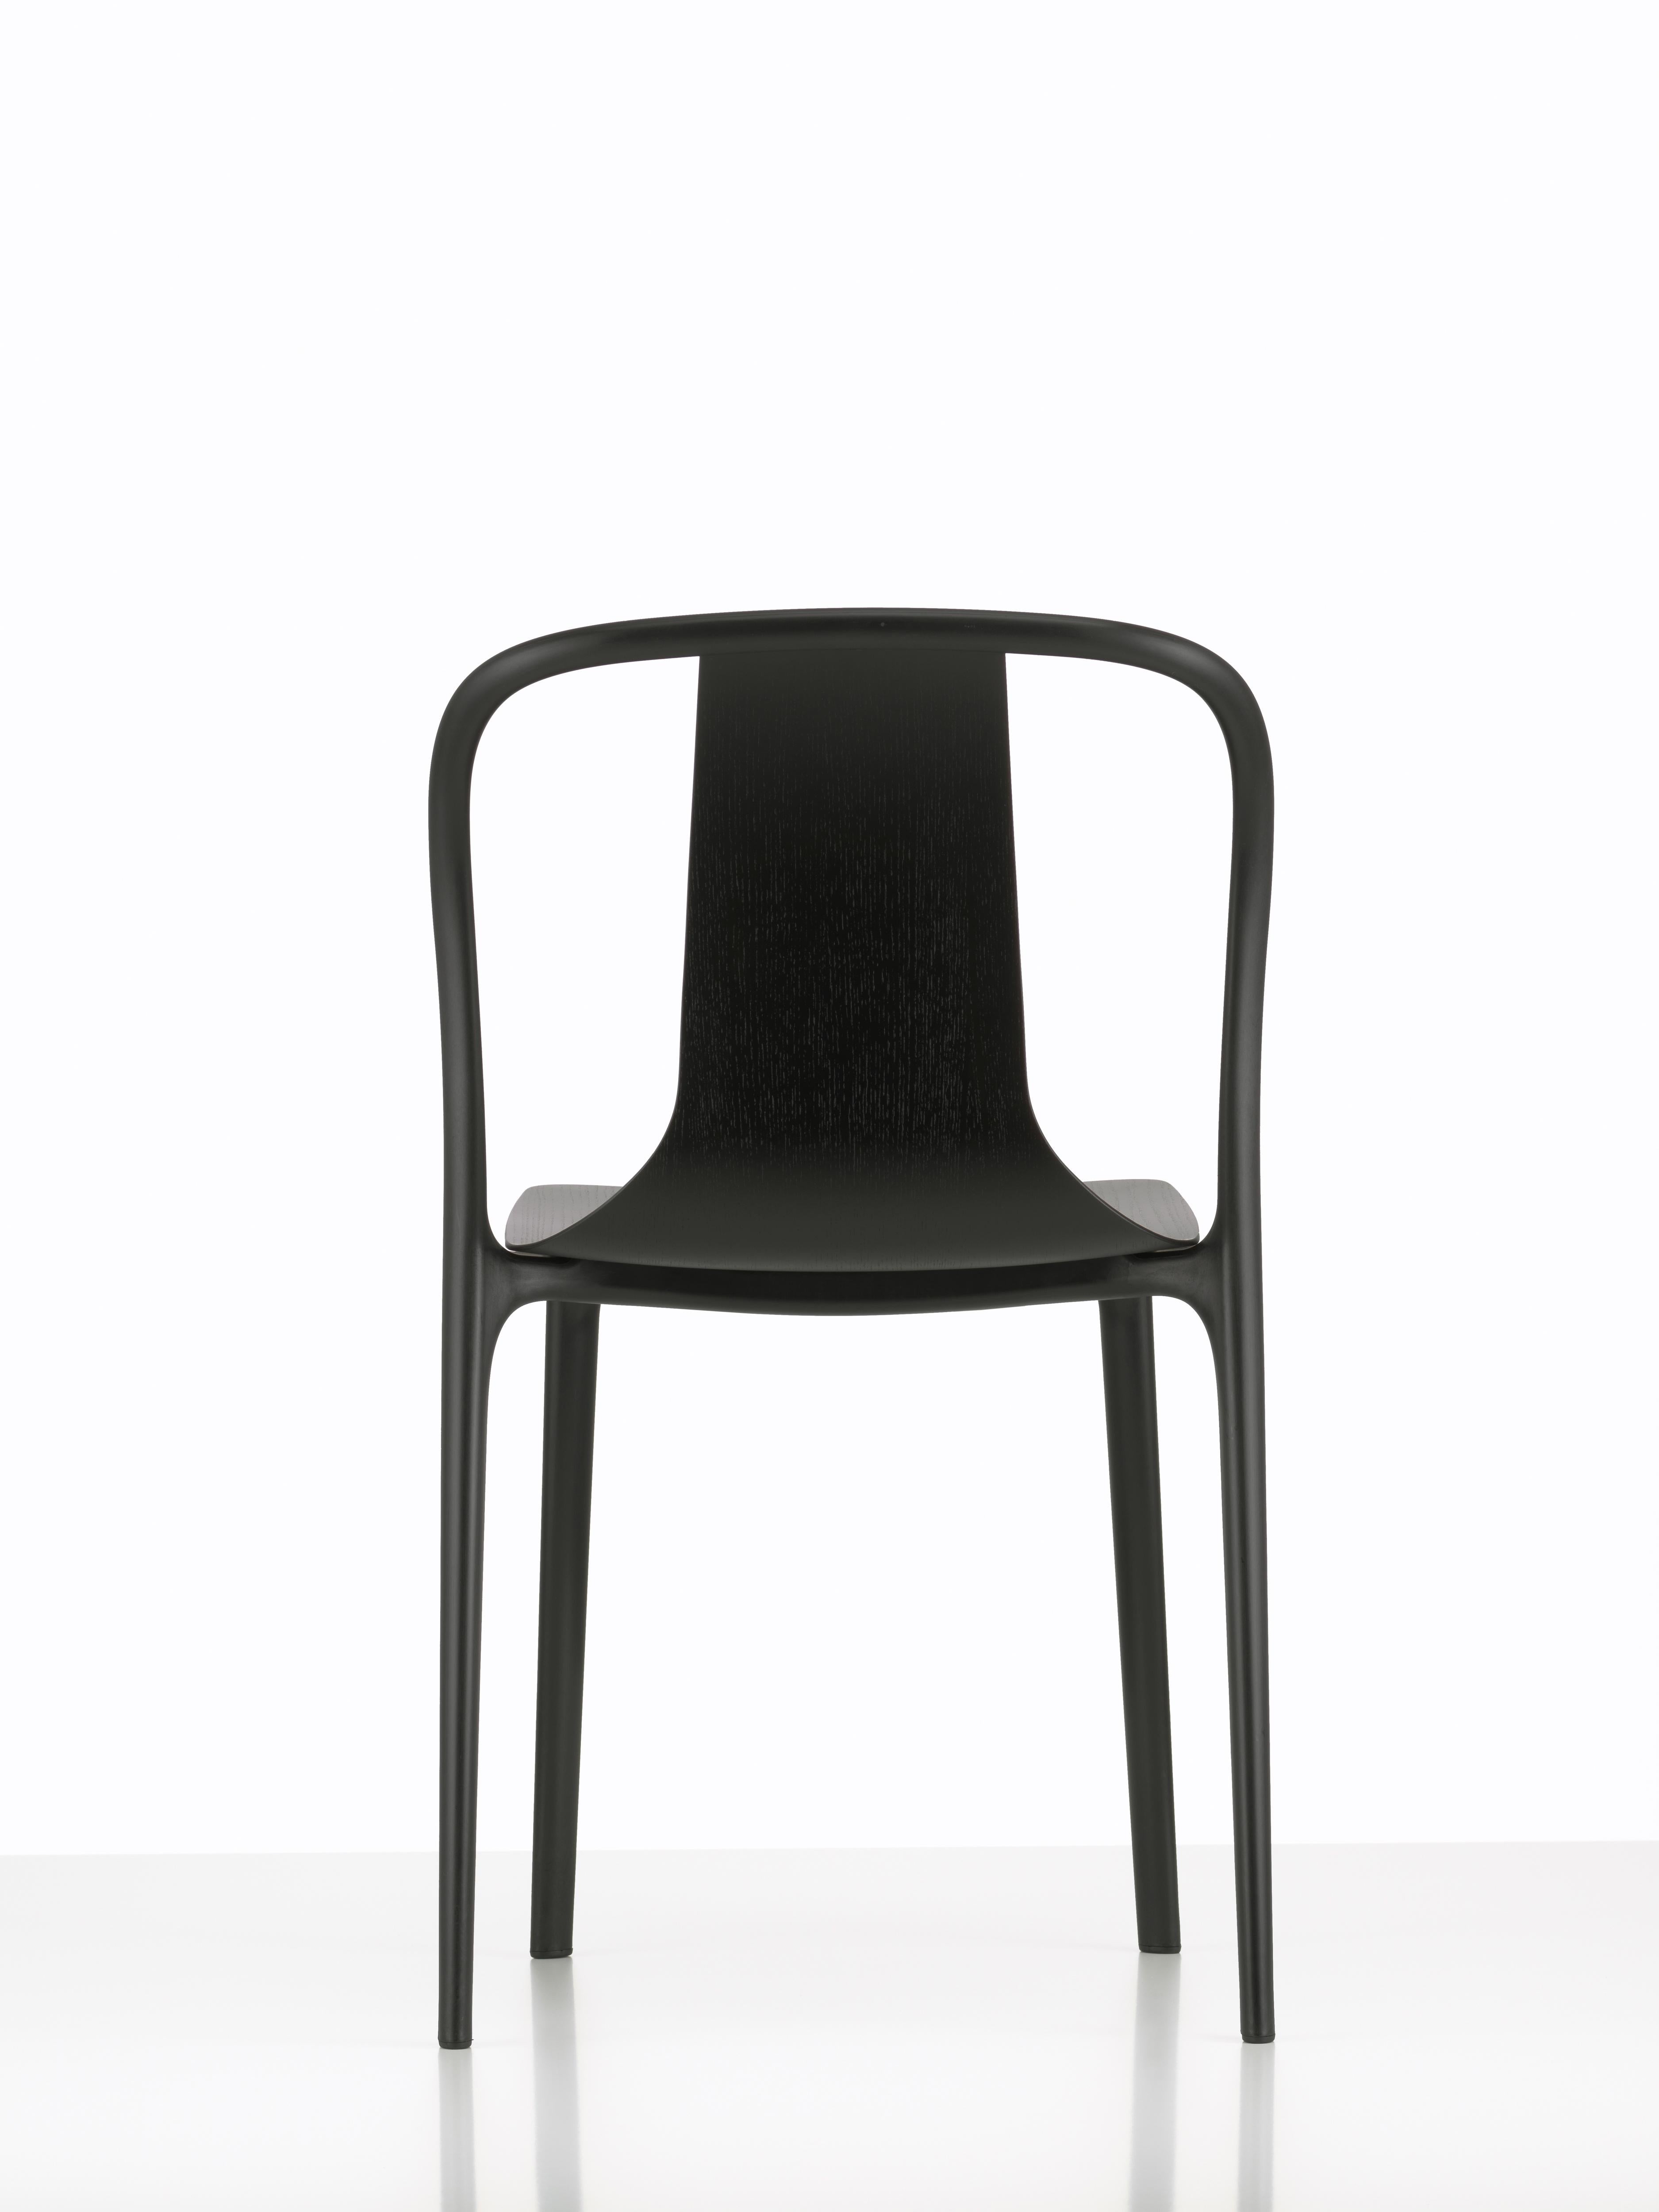 Modern Vitra Belleville Chair in Black Ash by Ronan & Erwan Bouroullec For Sale